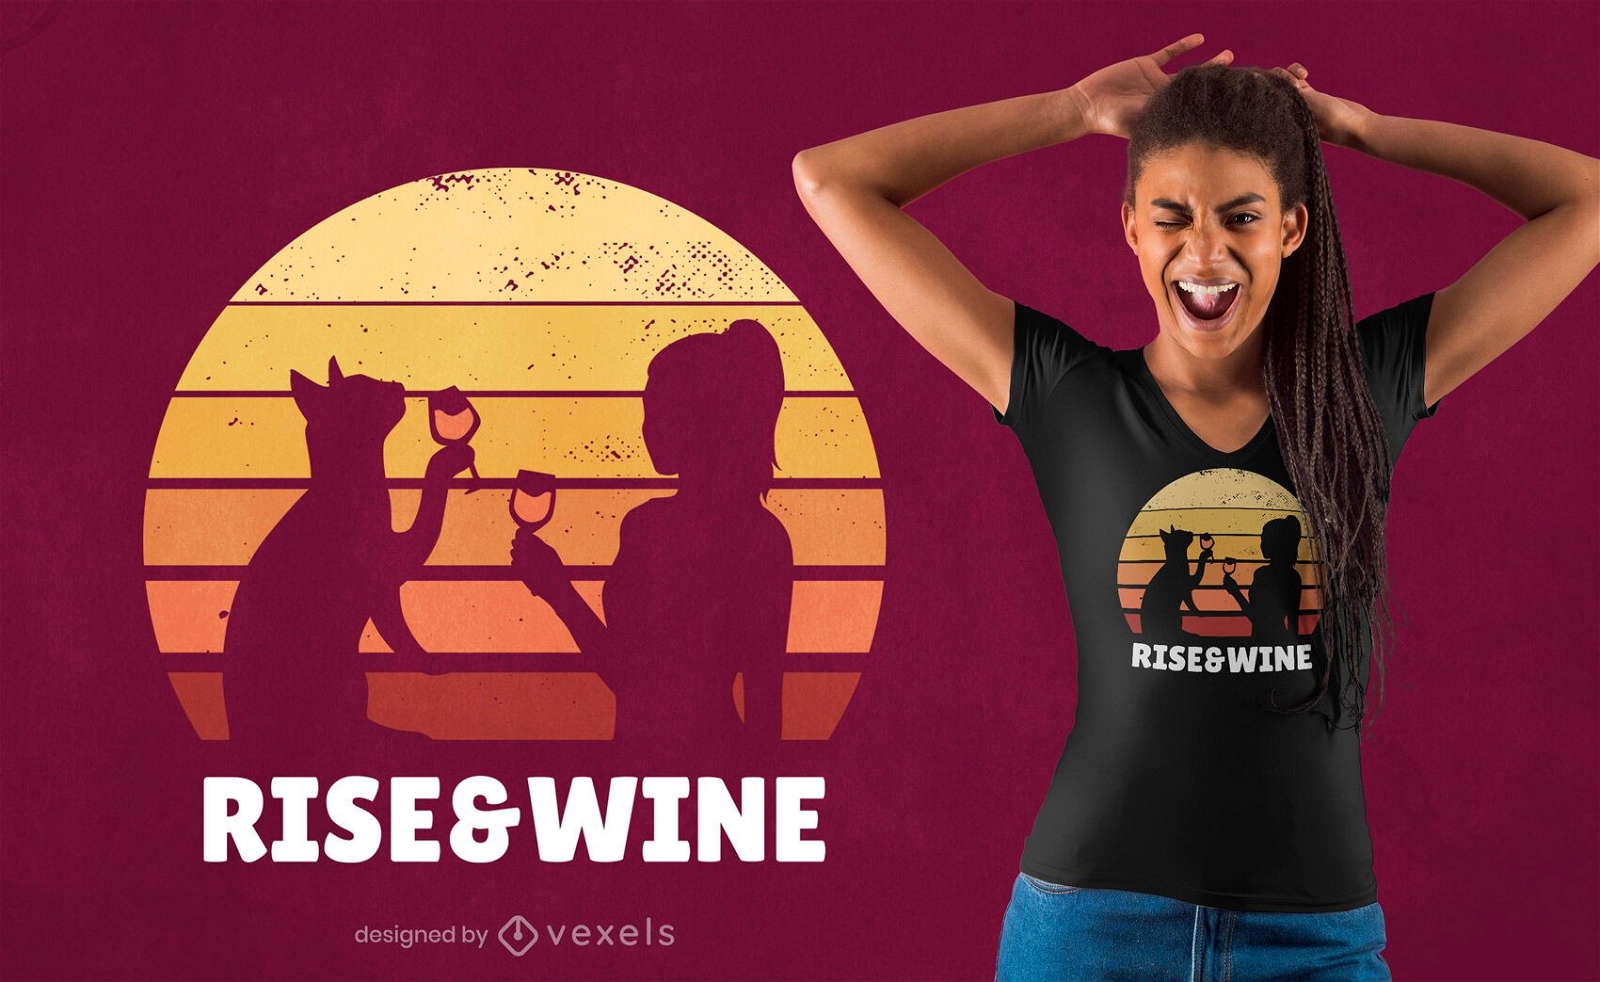 Rise & wine sunset t-shirt design